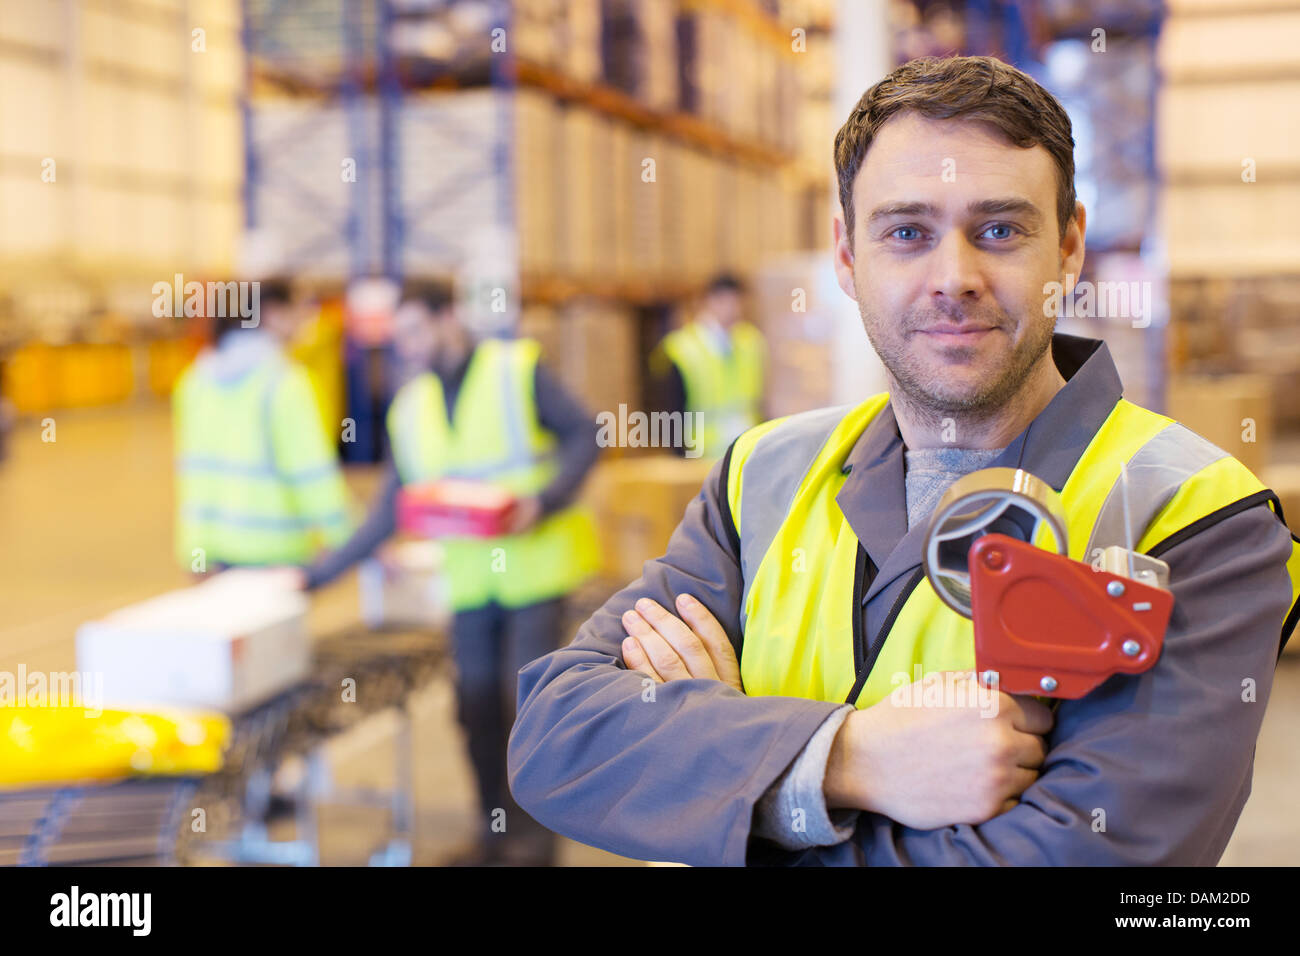 Worker holding tape dispenser in warehouse Stock Photo